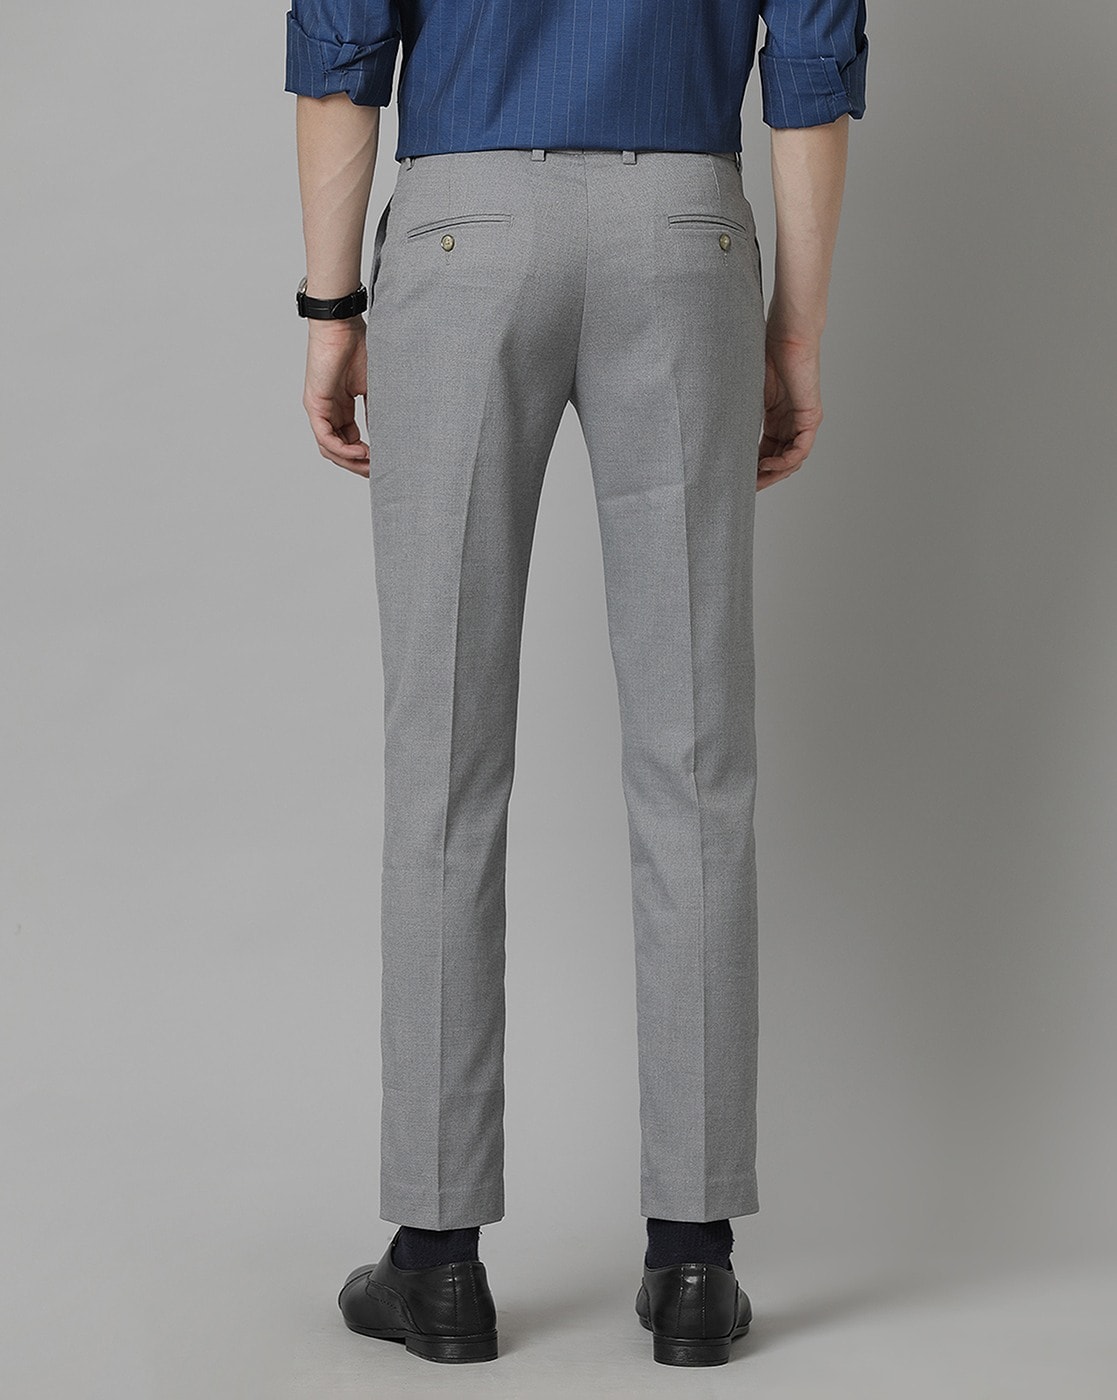 Display 125+ grey formal pants latest